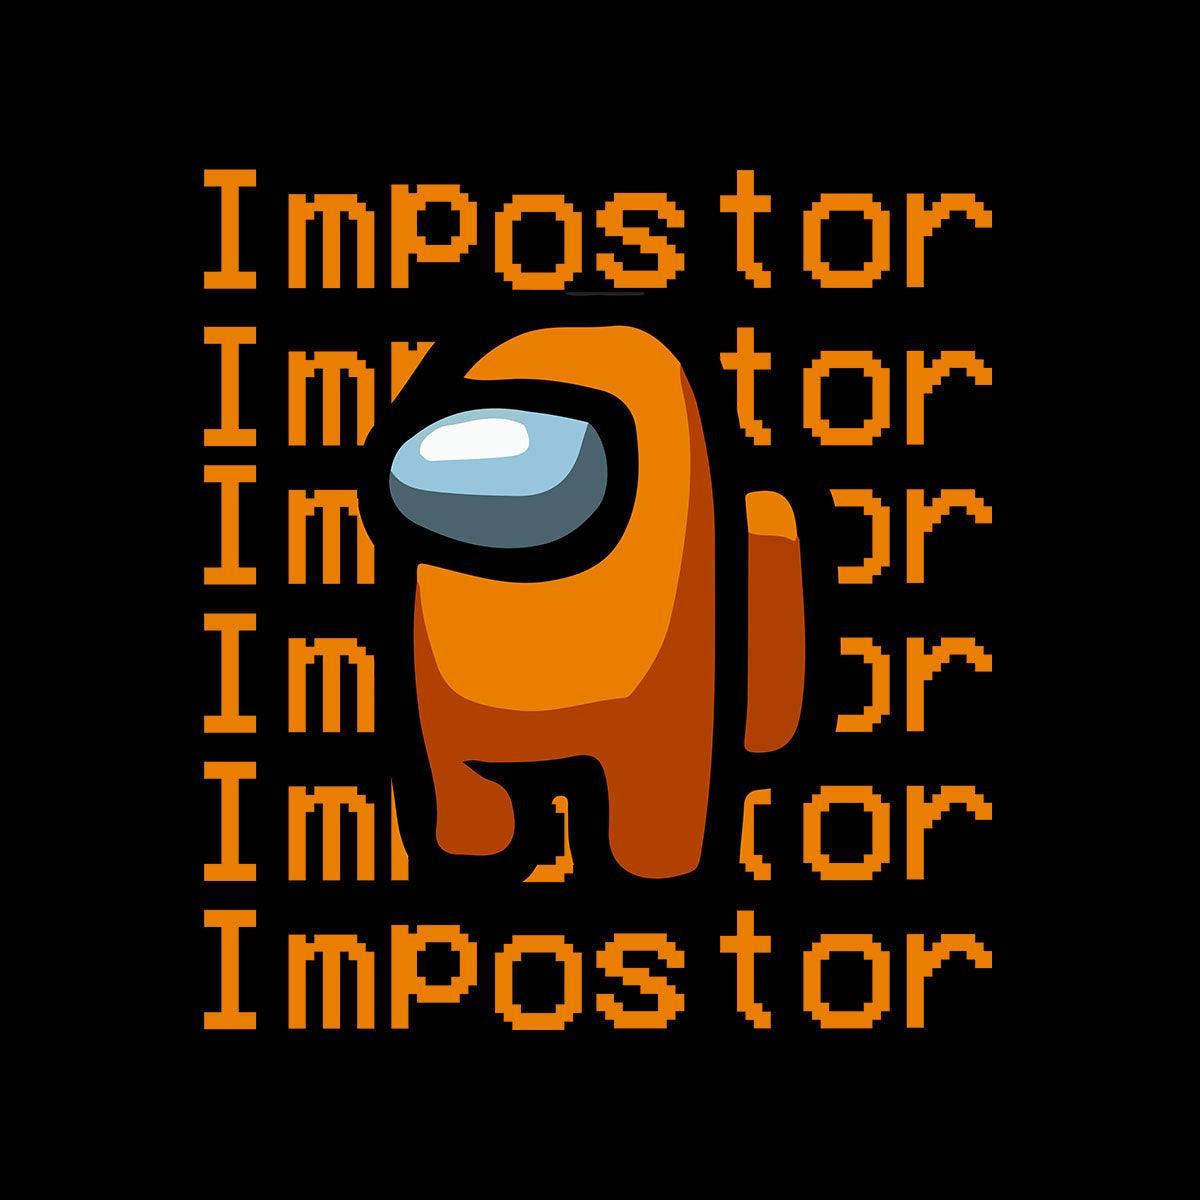 Impostor Among Us Gamer Male Tee Xmas Funny Orange Viral Game Retro Tee Unisex T-Shirt - Kuzi Tees